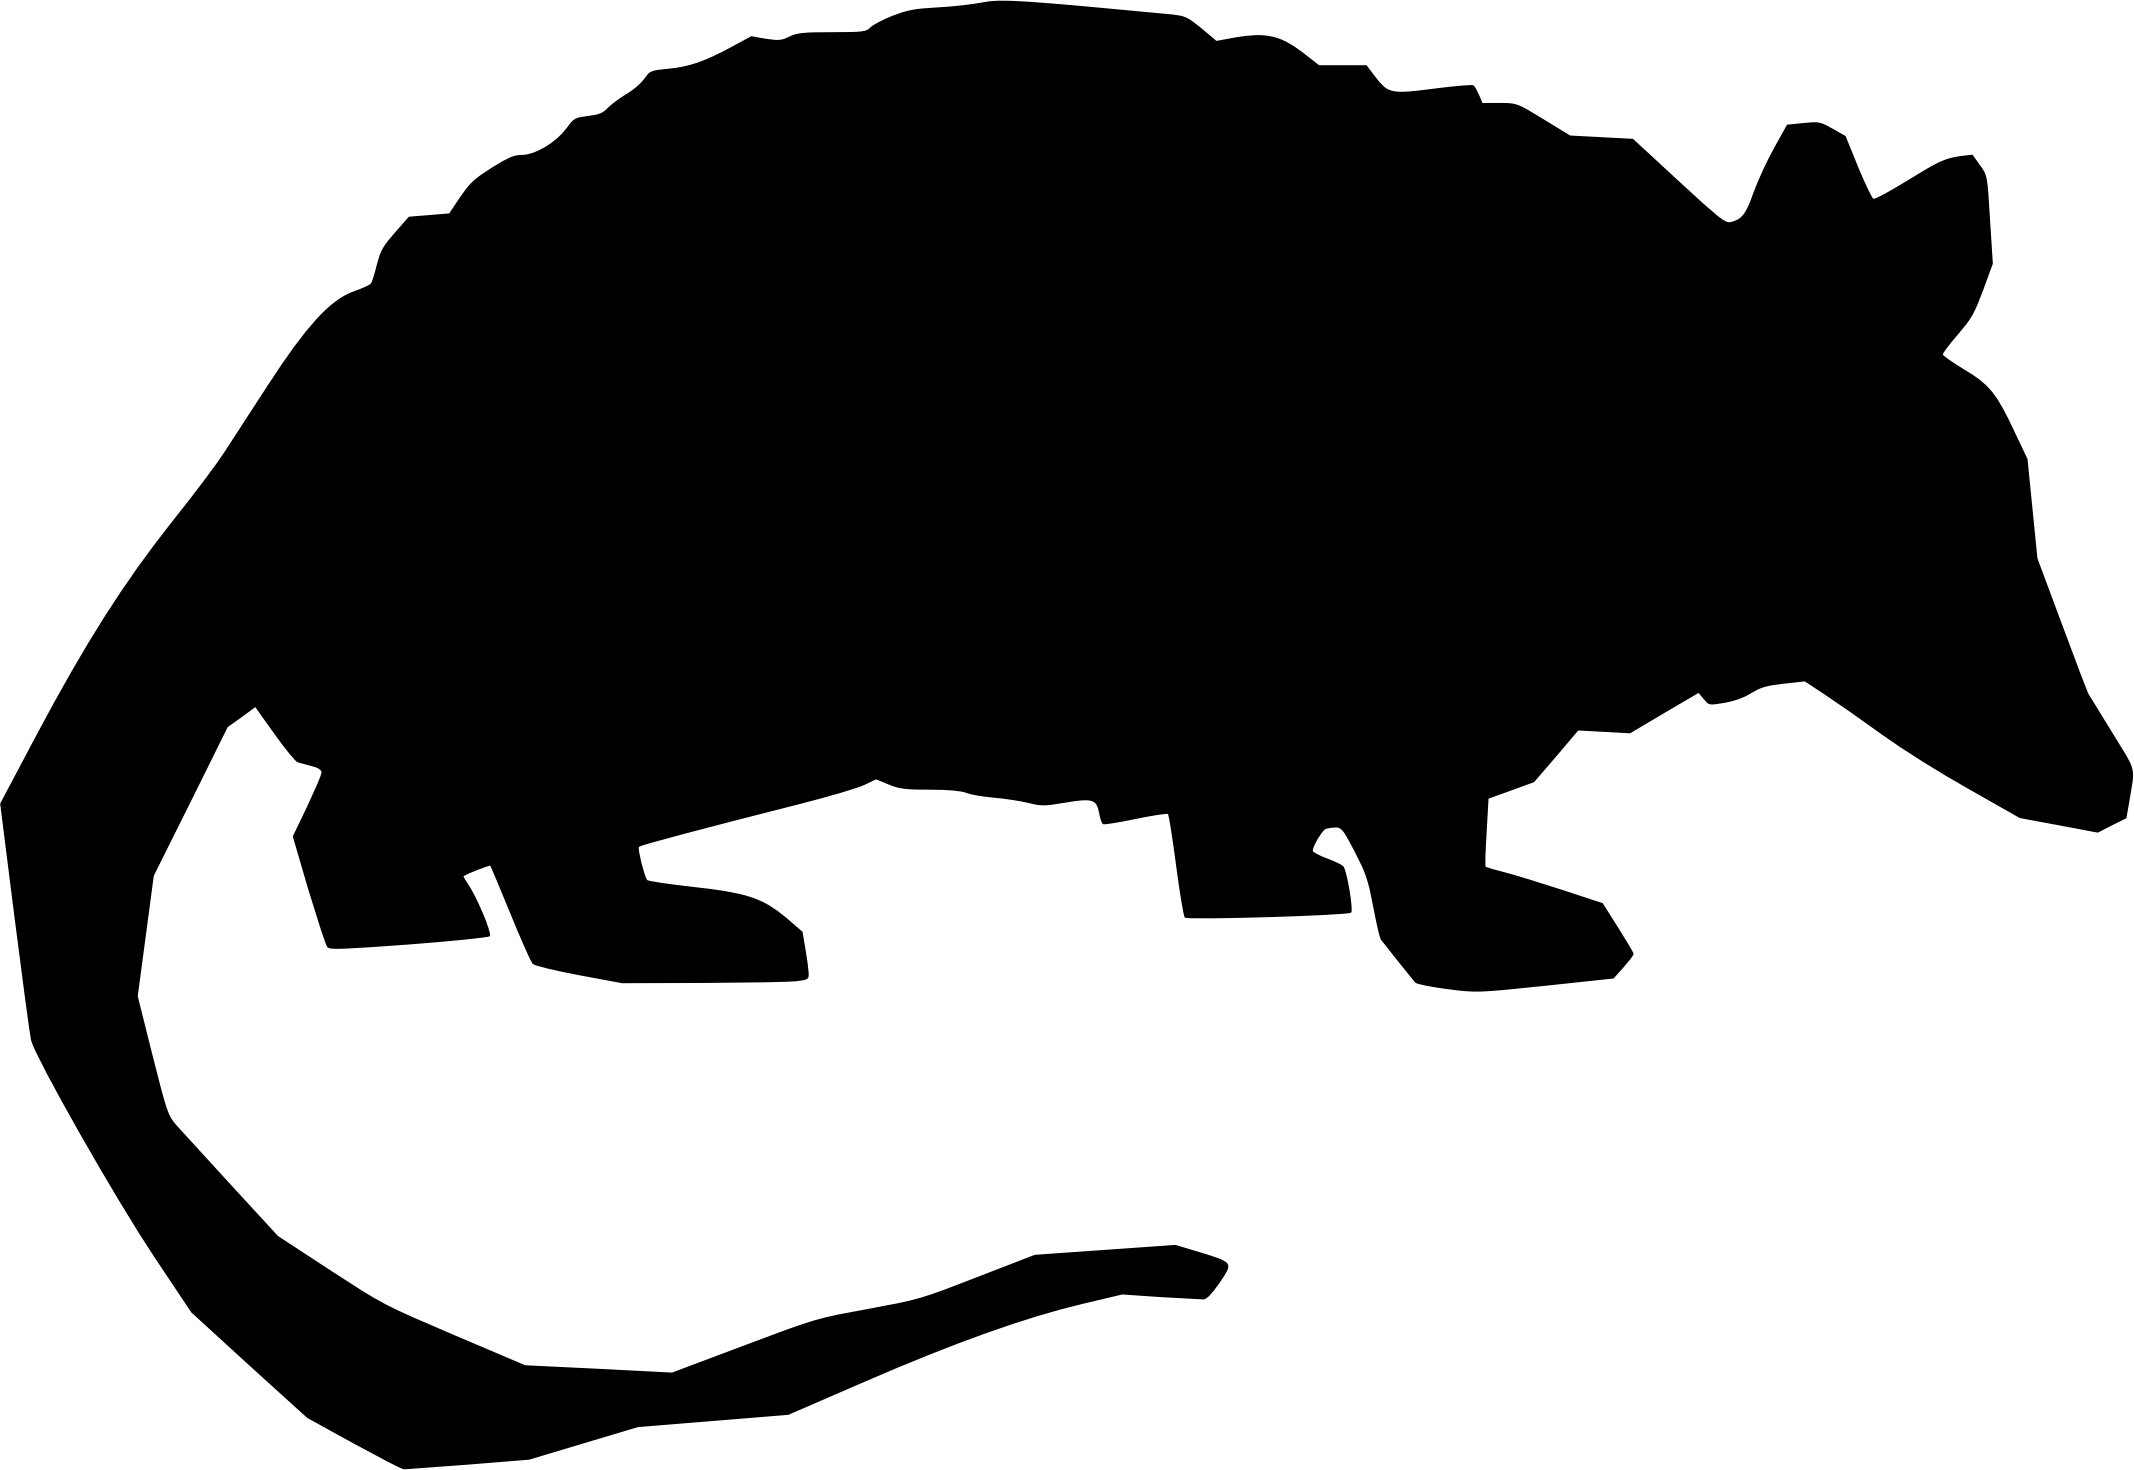 Big Image - Armadillo Silhouette Transparent (2134x1470)